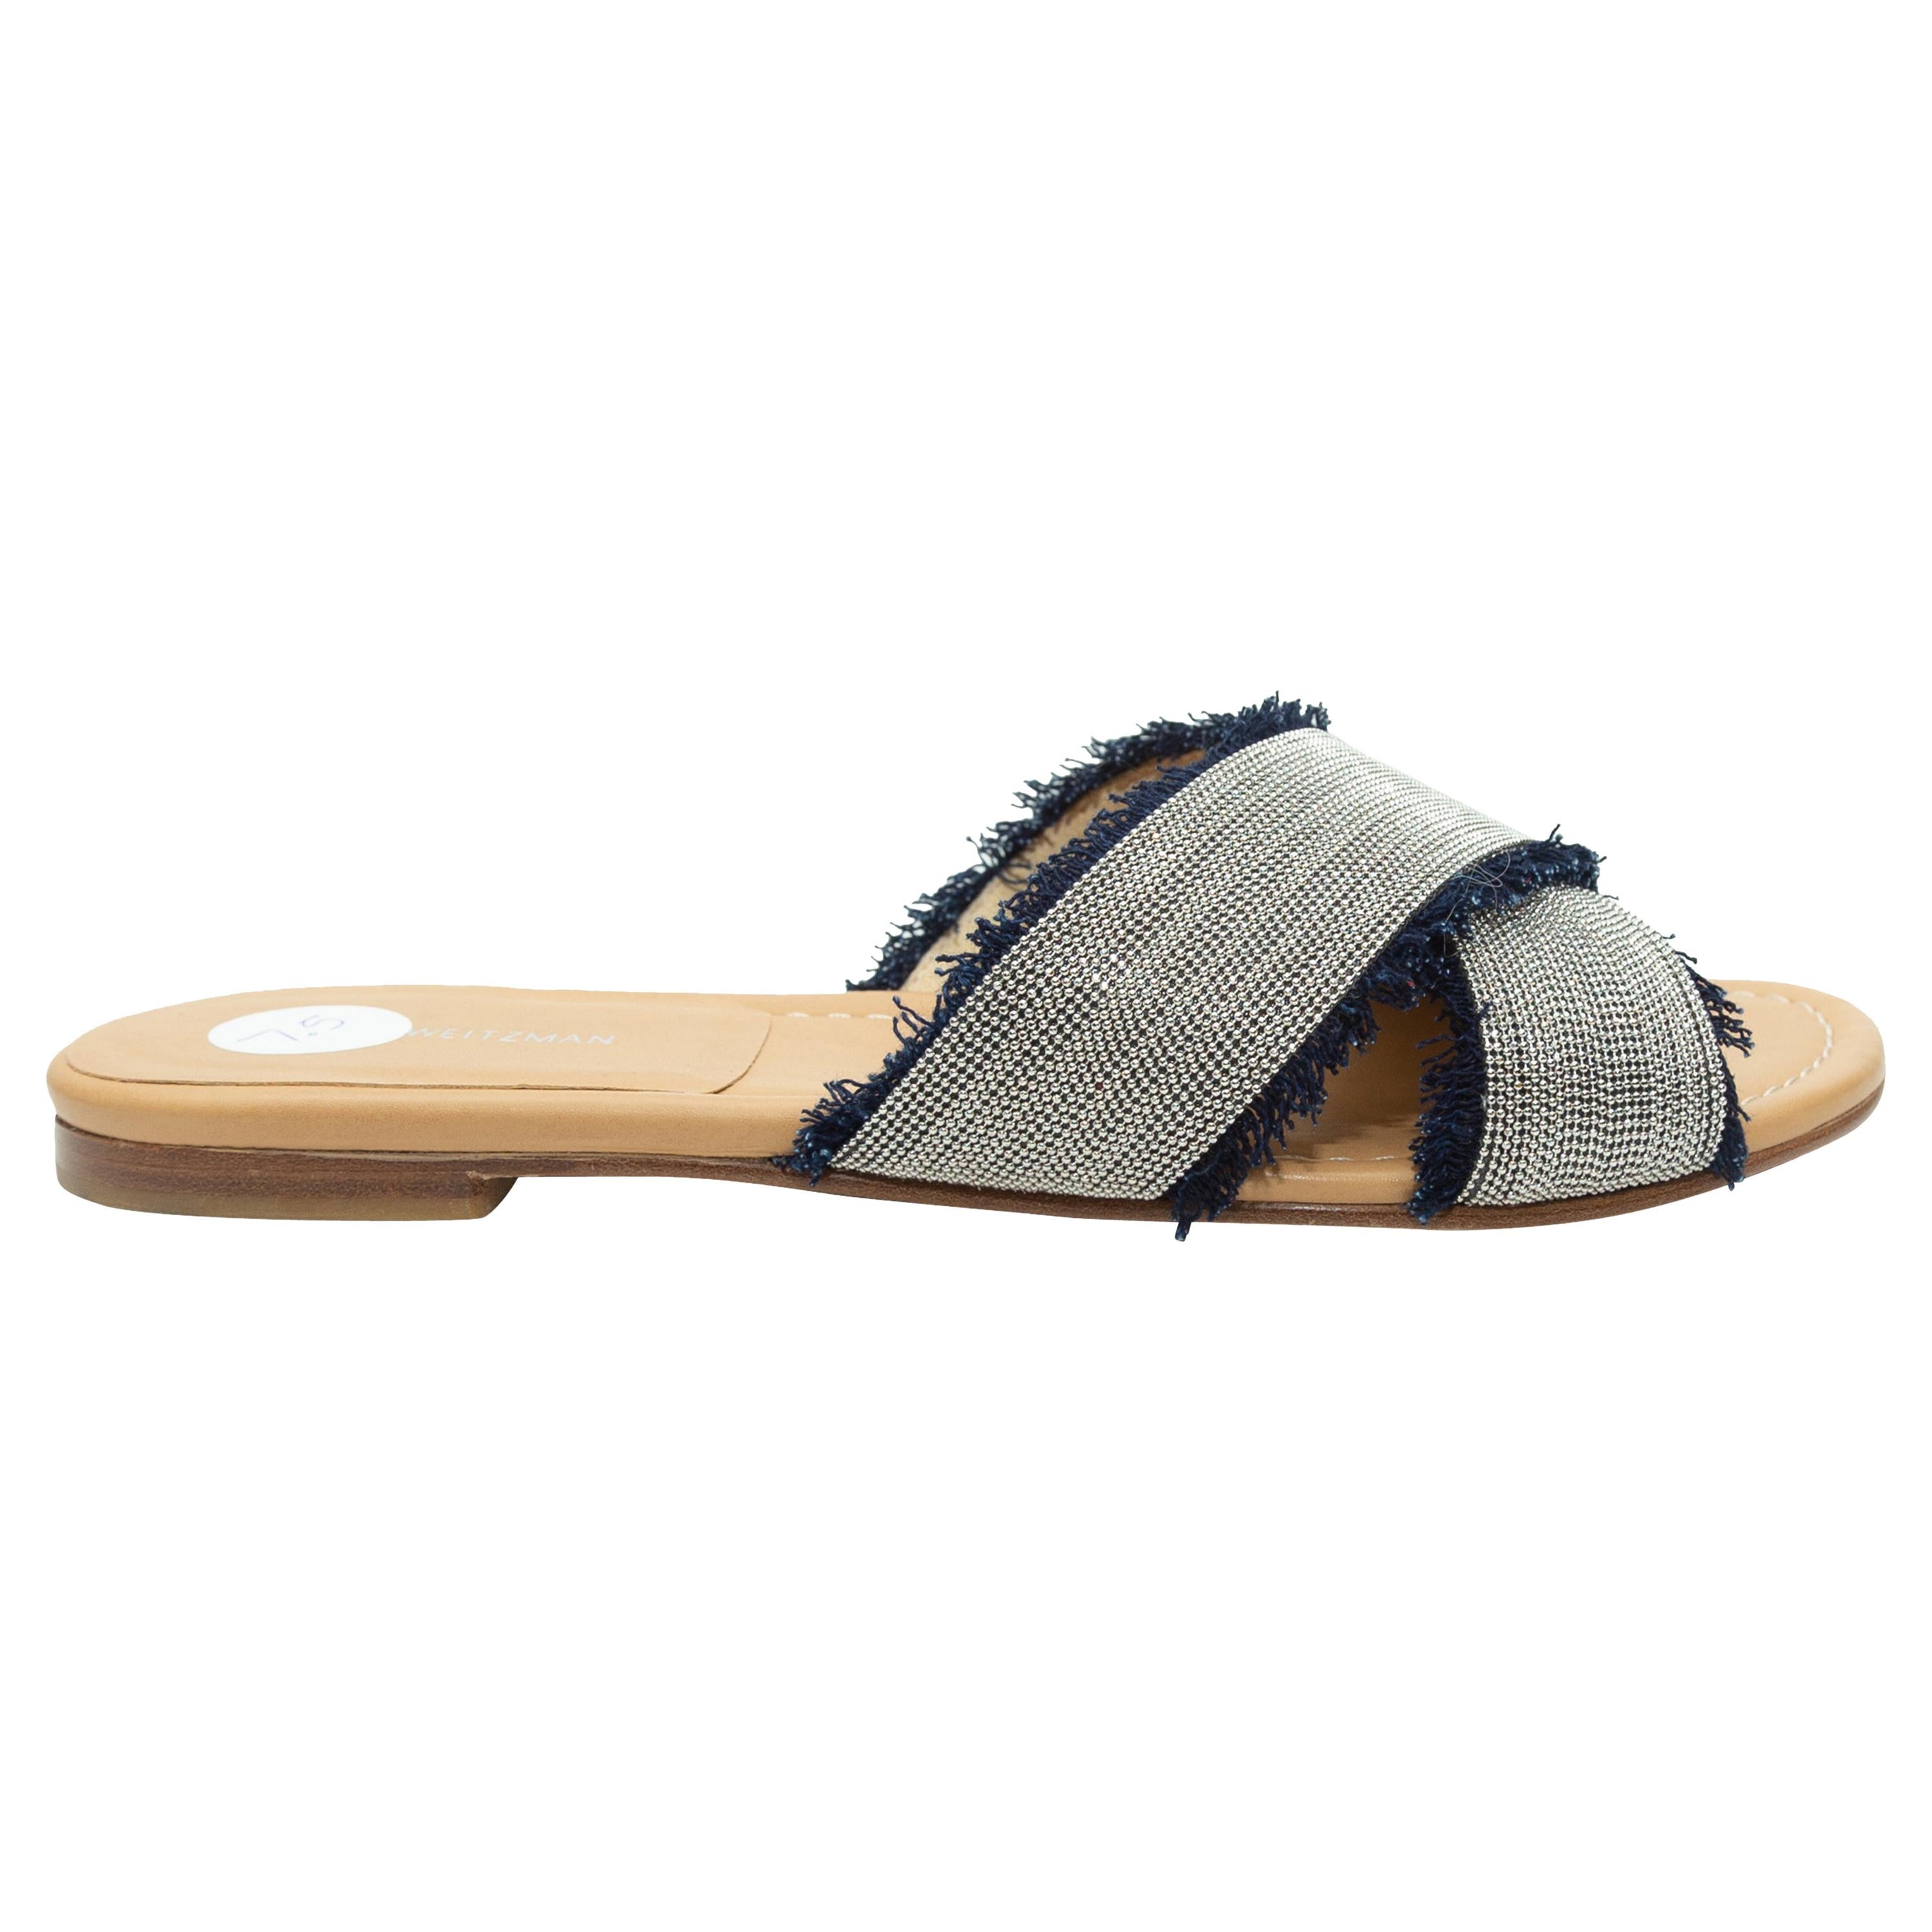 Stuart Weitzman Navy & Silver-Tone Slide Sandals